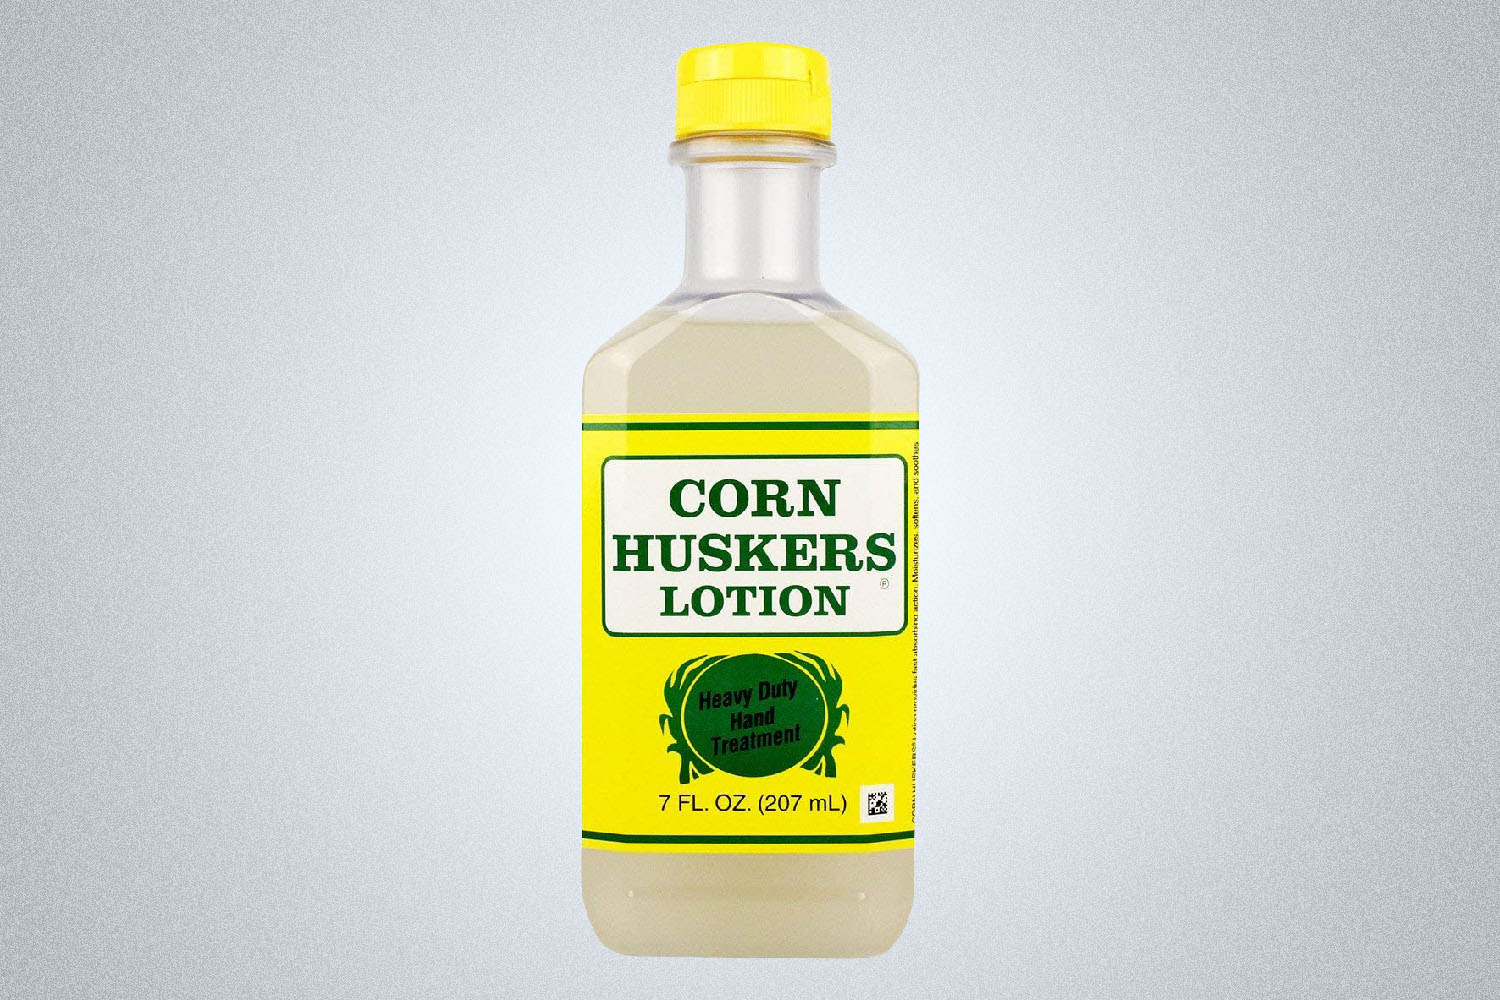 Corn Huskers Oil-Free Hand Lotion – 7 fl oz